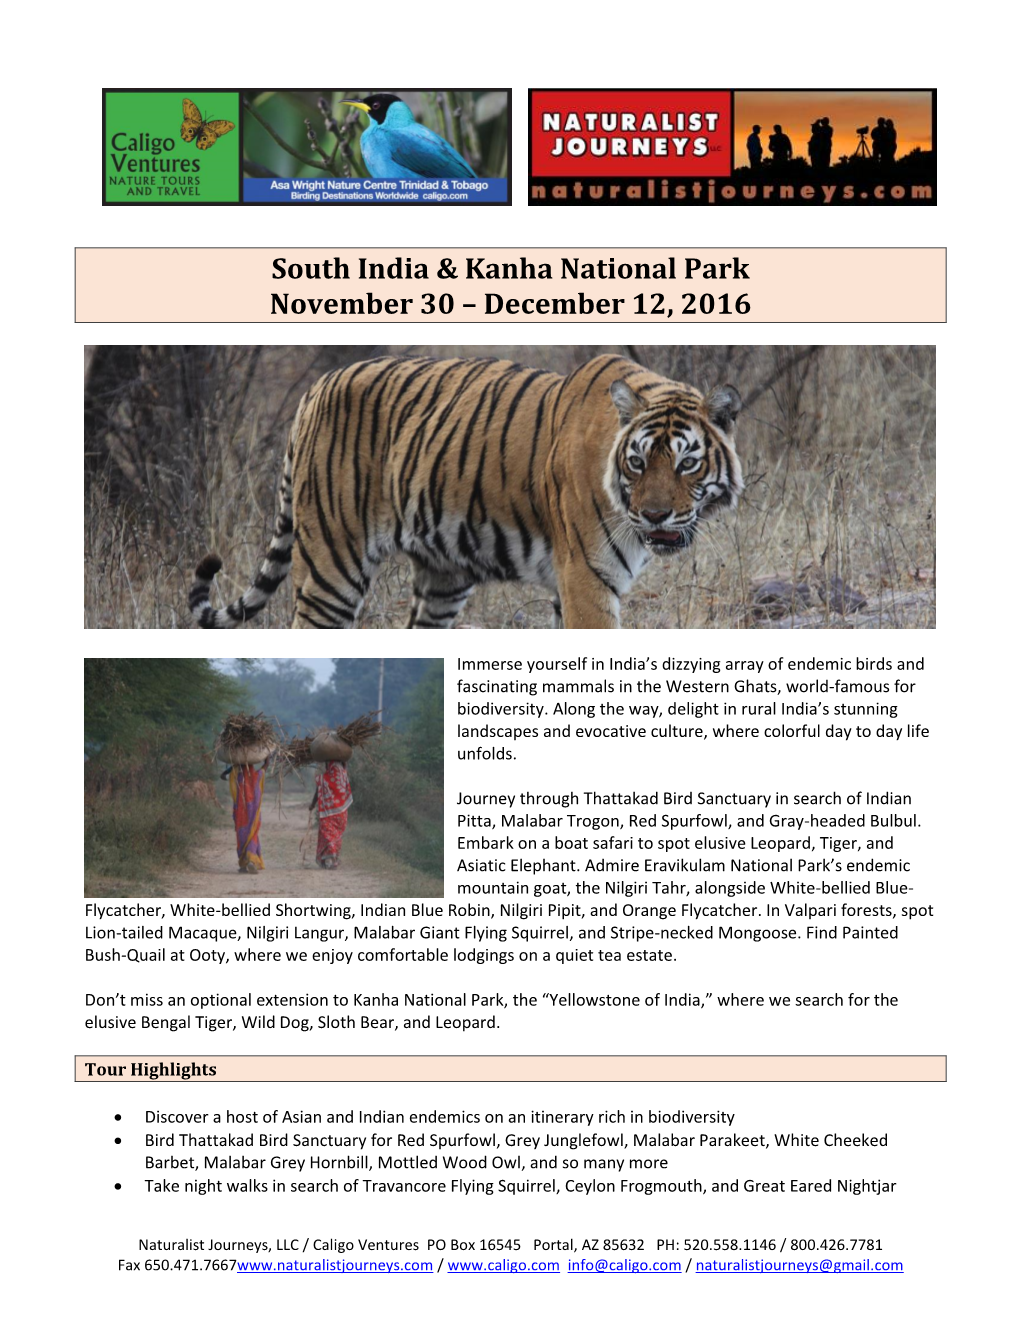 South India & Kanha National Park November 30